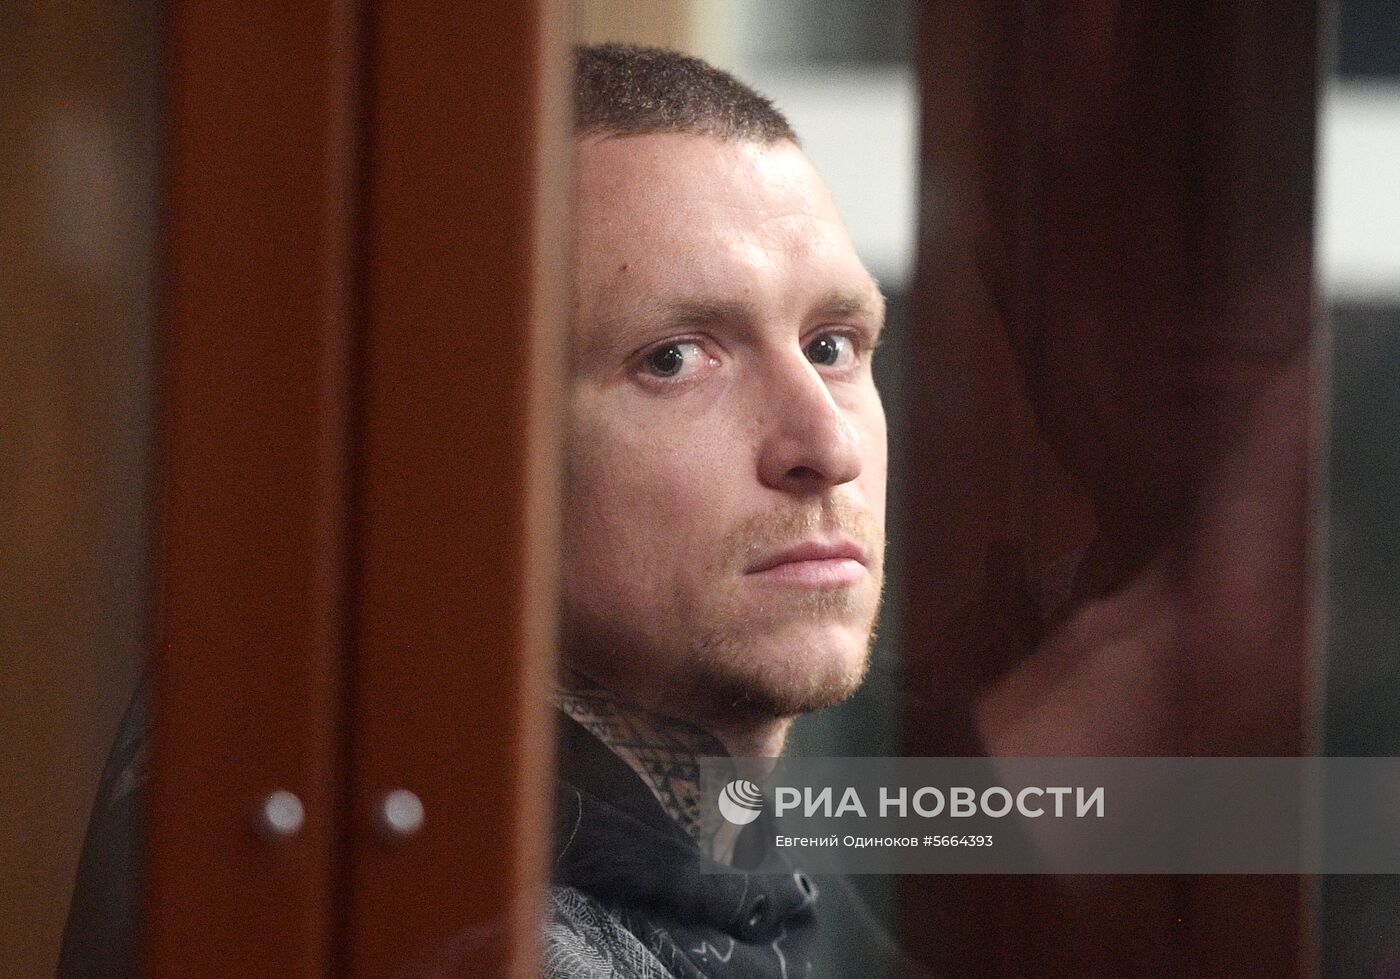 Рассмотрение ходатайства следствия об аресте А. Кокорина и П. Мамаева